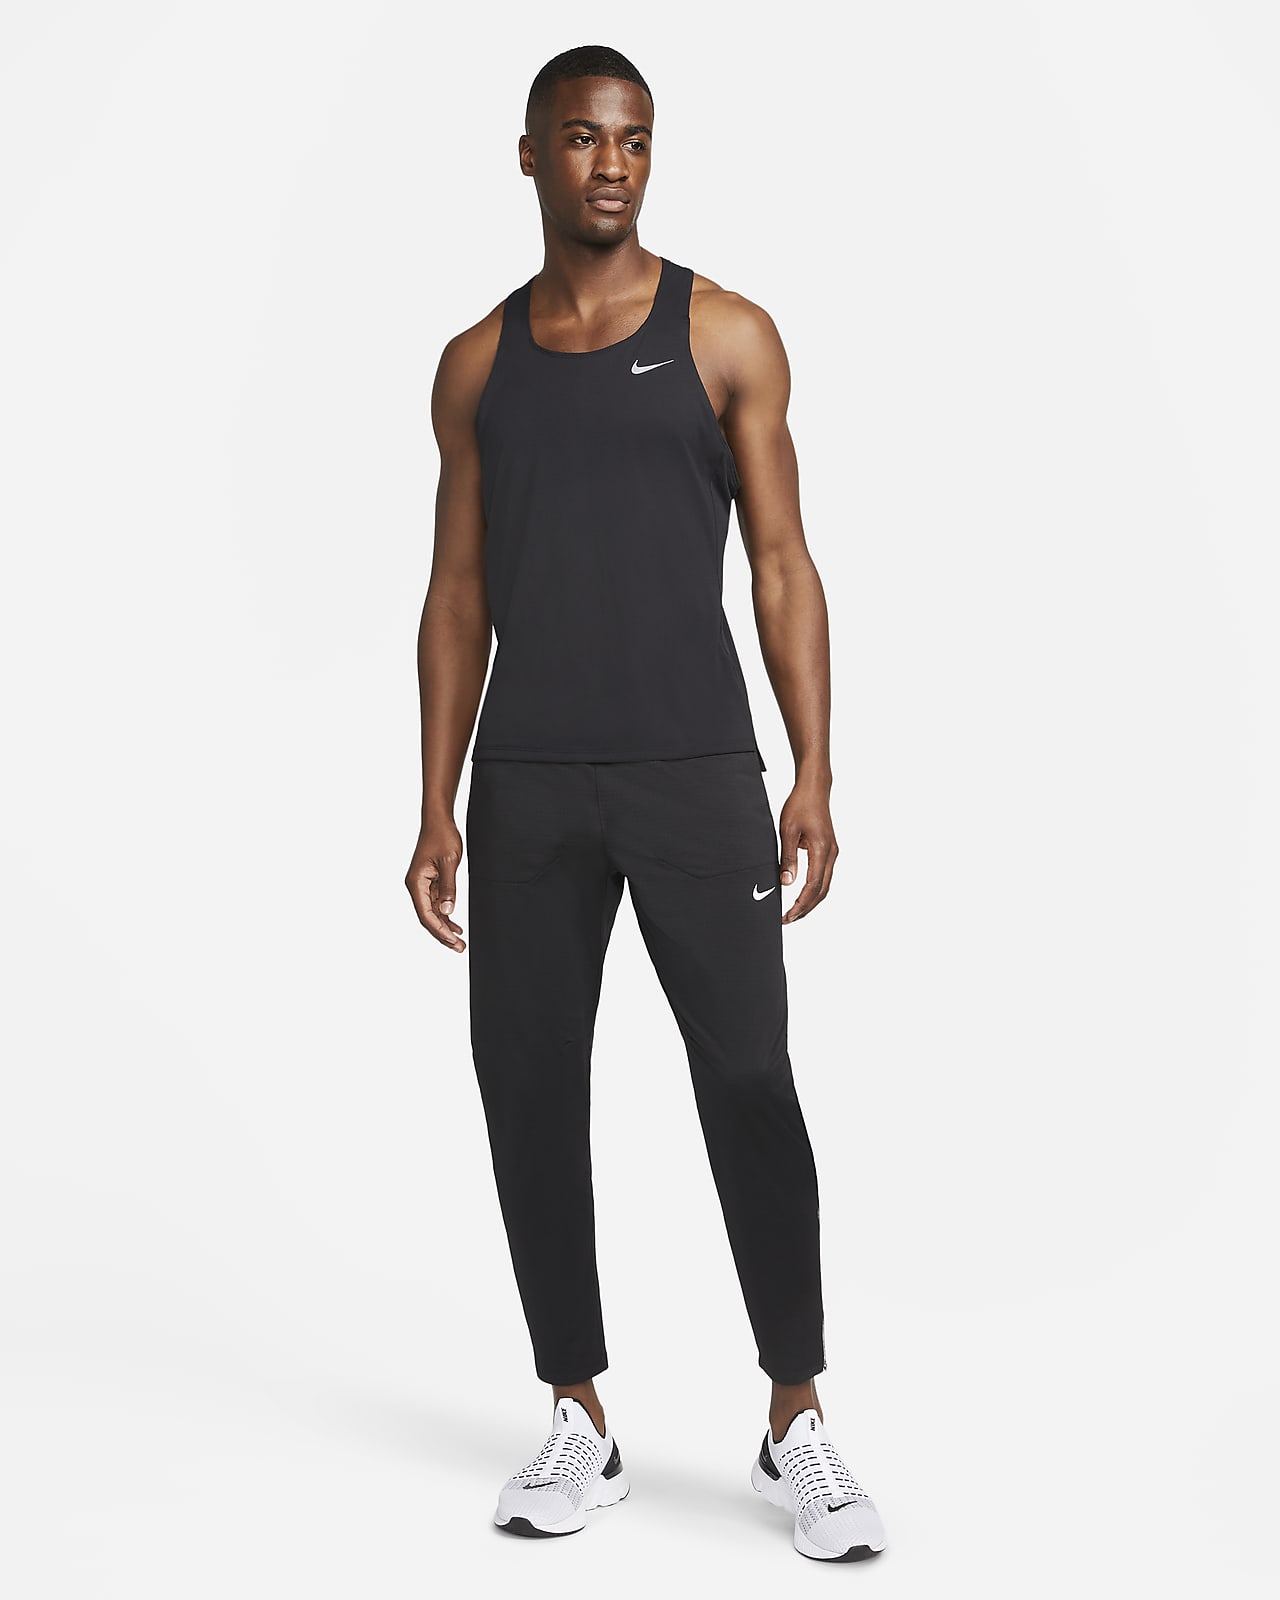 Incierto aprender Escrutinio Camiseta sin mangas para carrera Nike Dri-FIT Fast para hombre. Nike.com